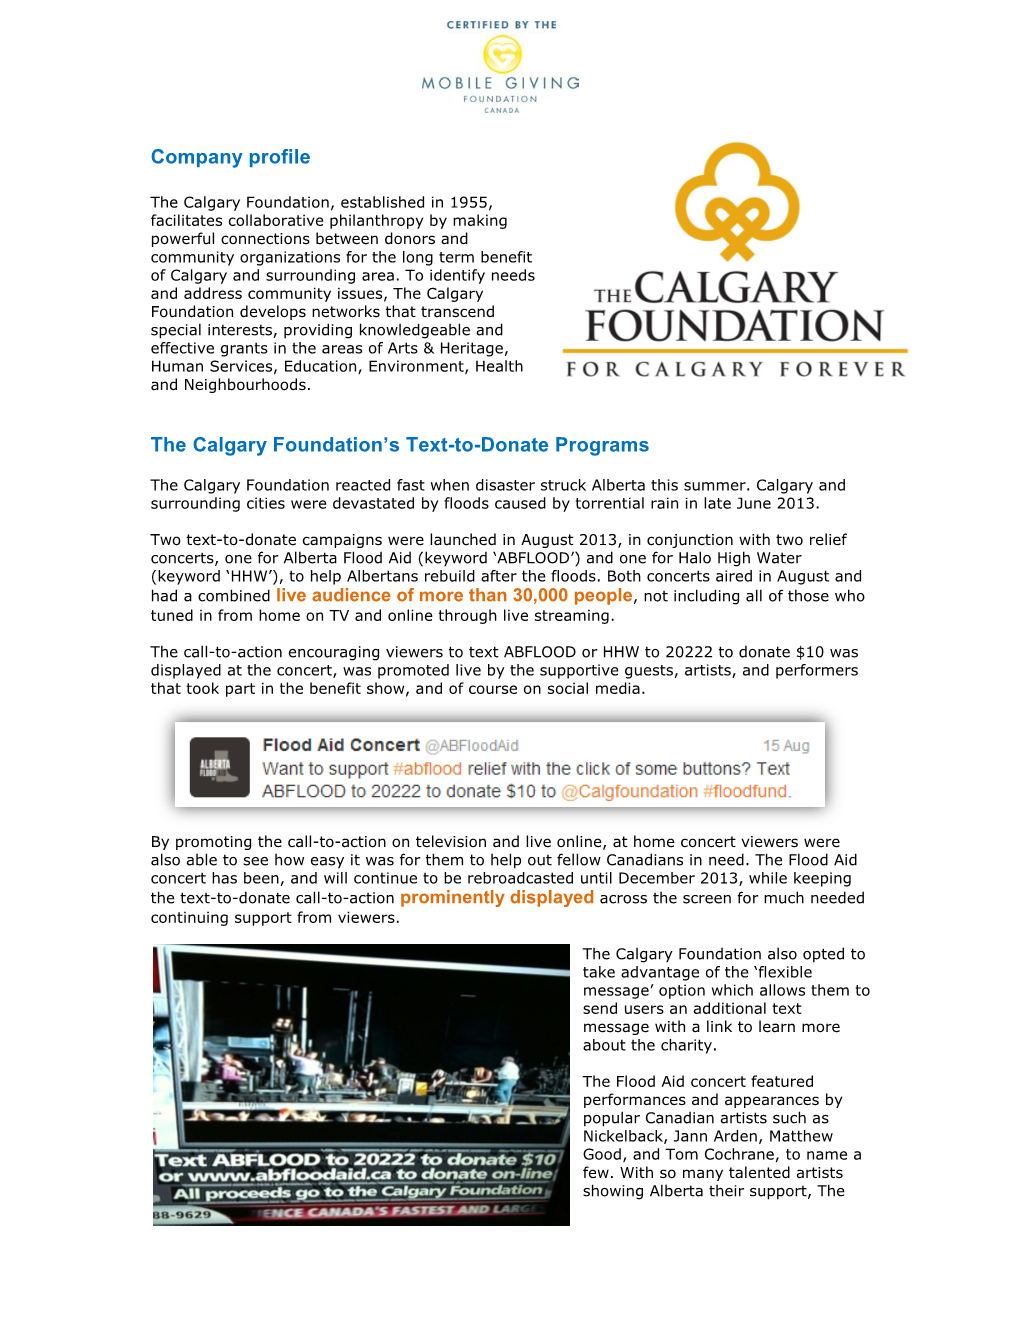 Company Profile the Calgary Foundation's Text-To-Donate